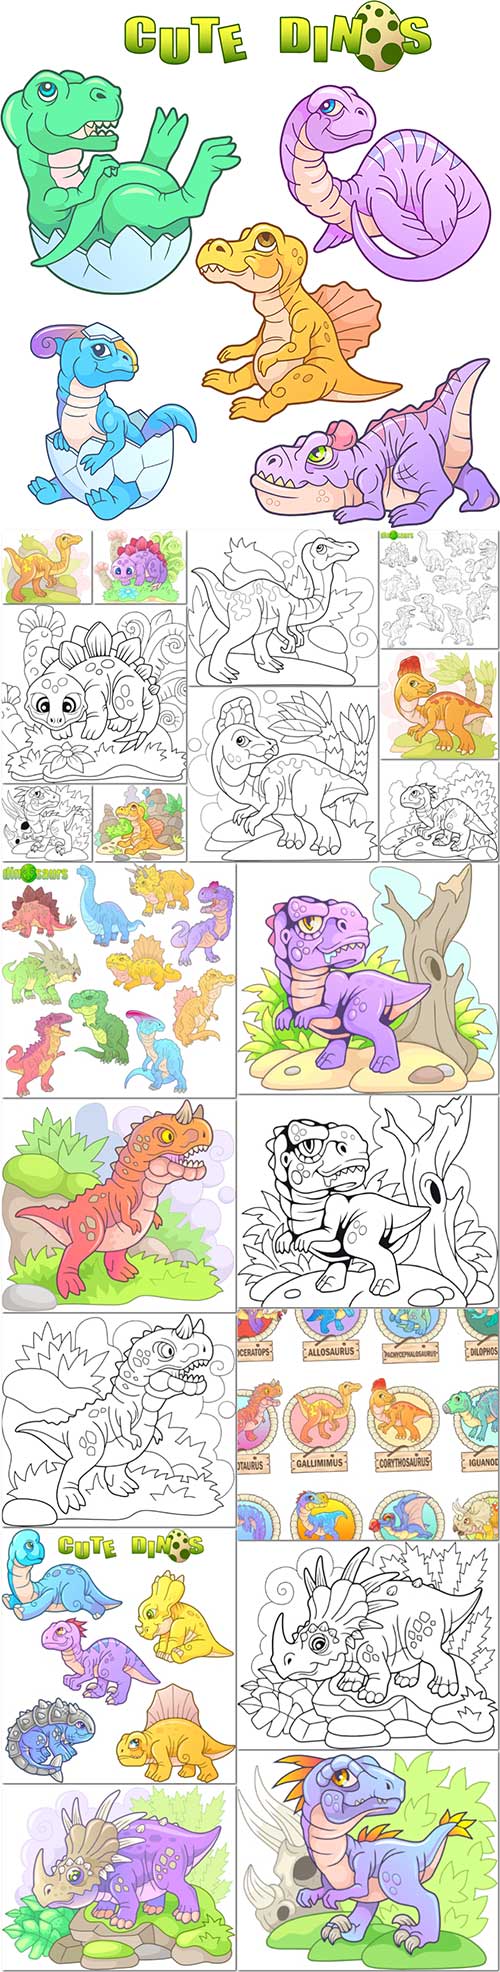 Cartoon dinosaurs premium vector